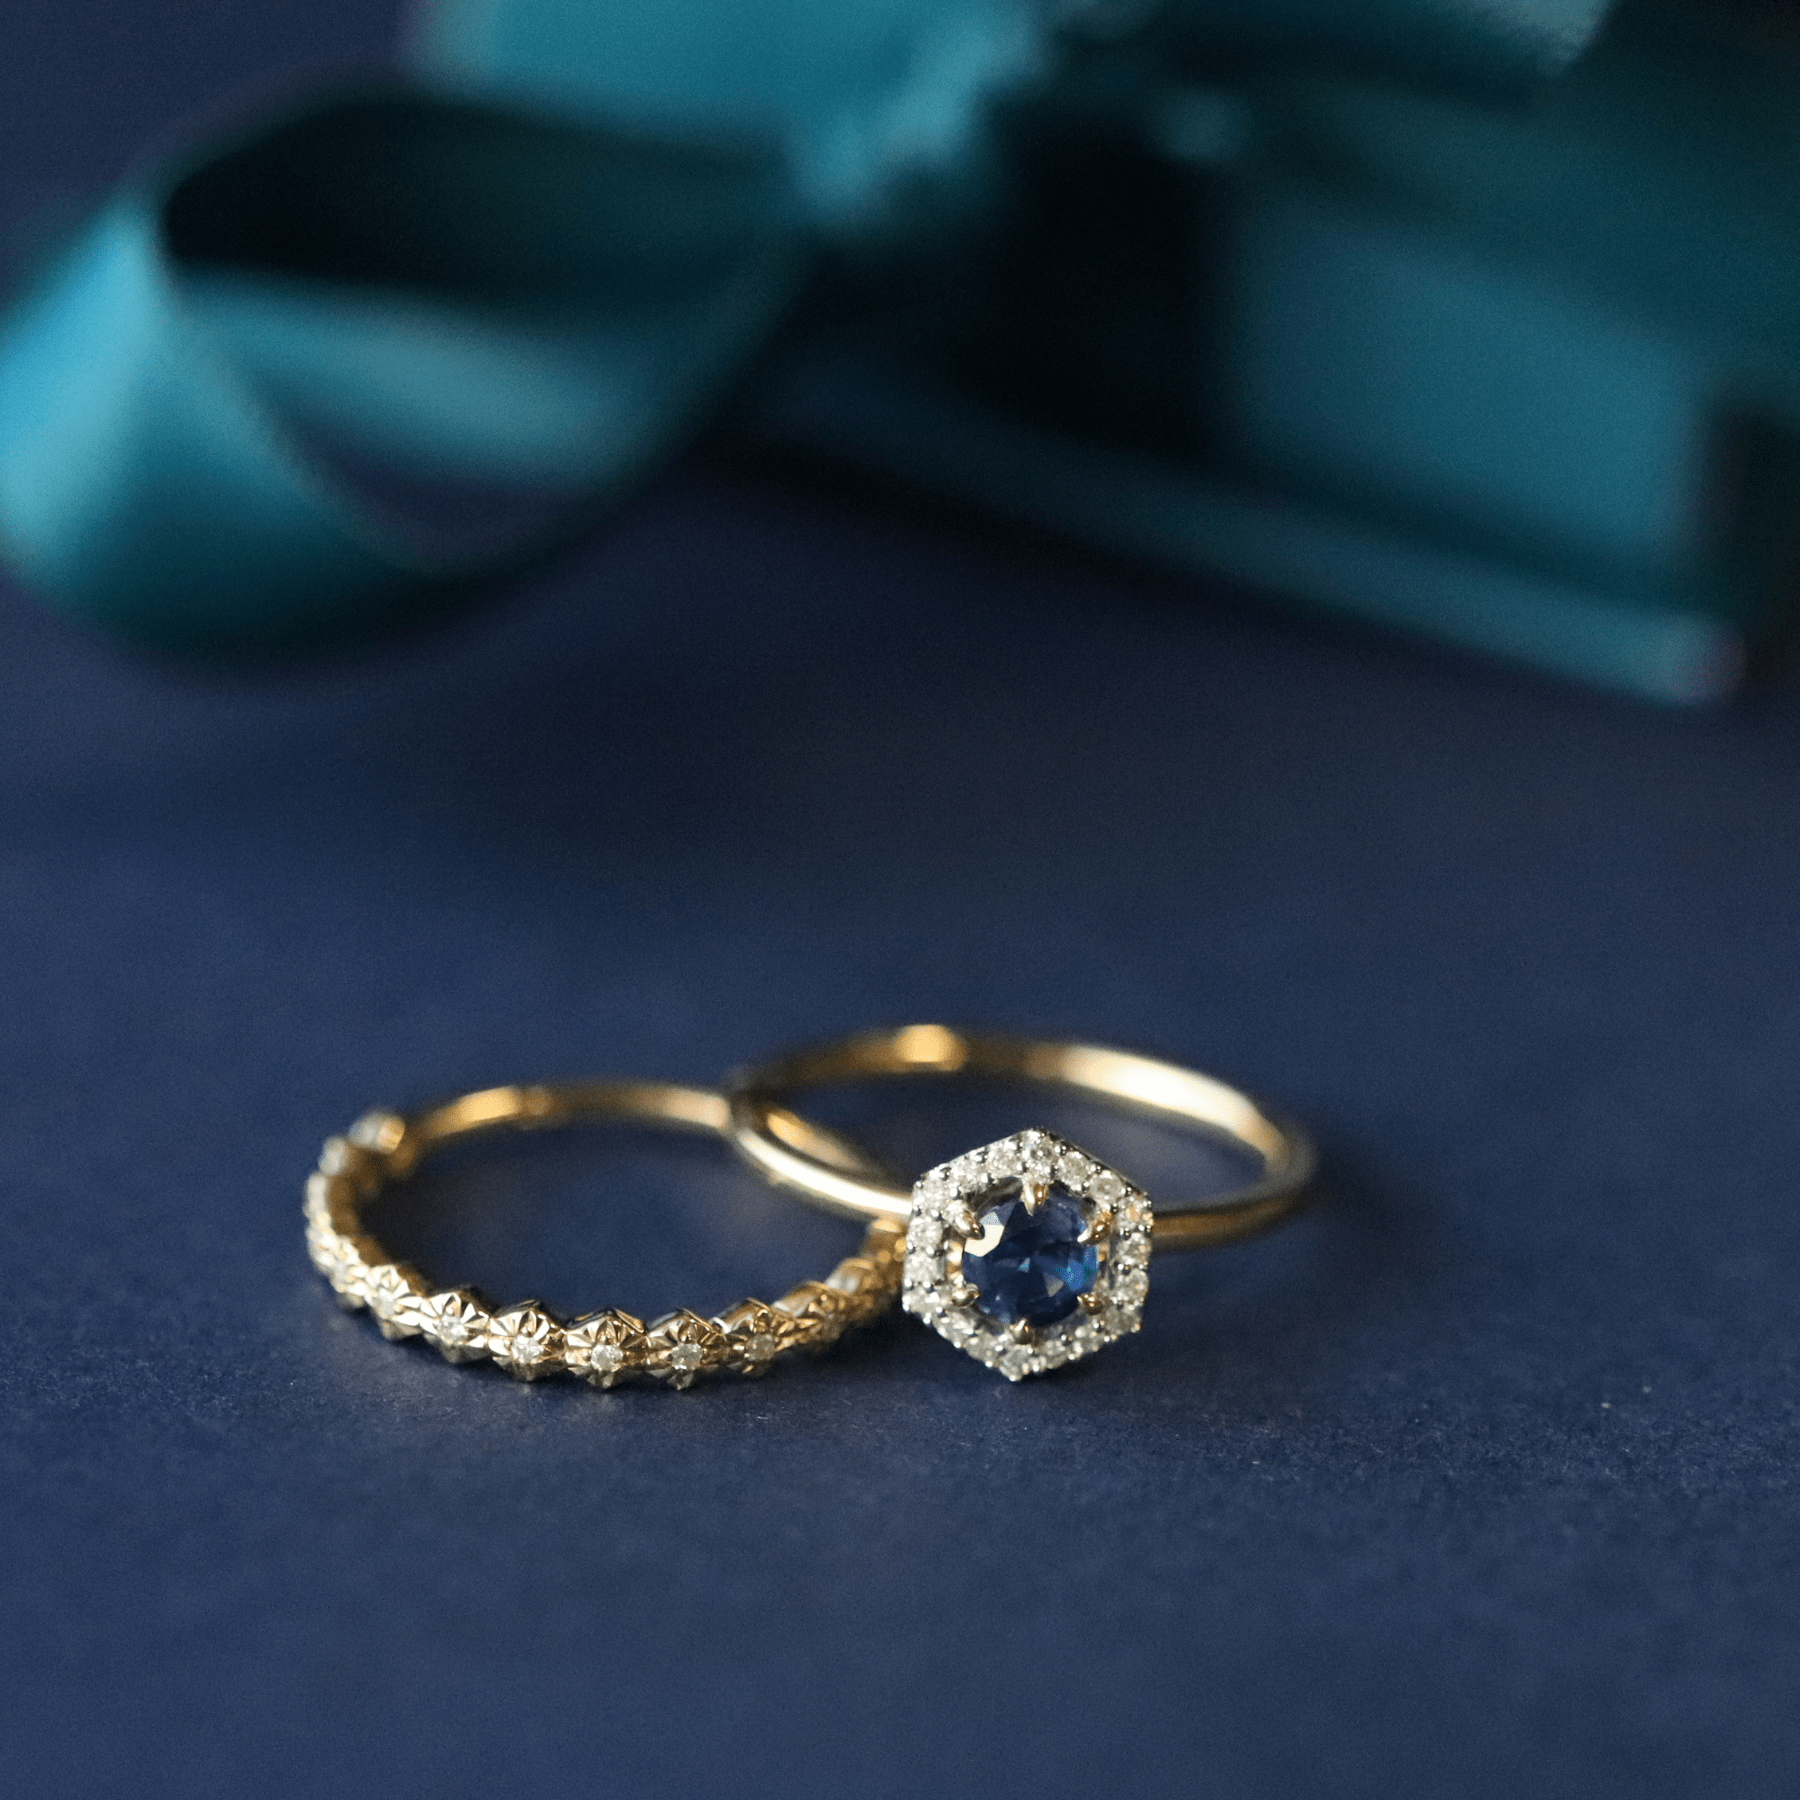 Sapphire & diamond wedding ring stack